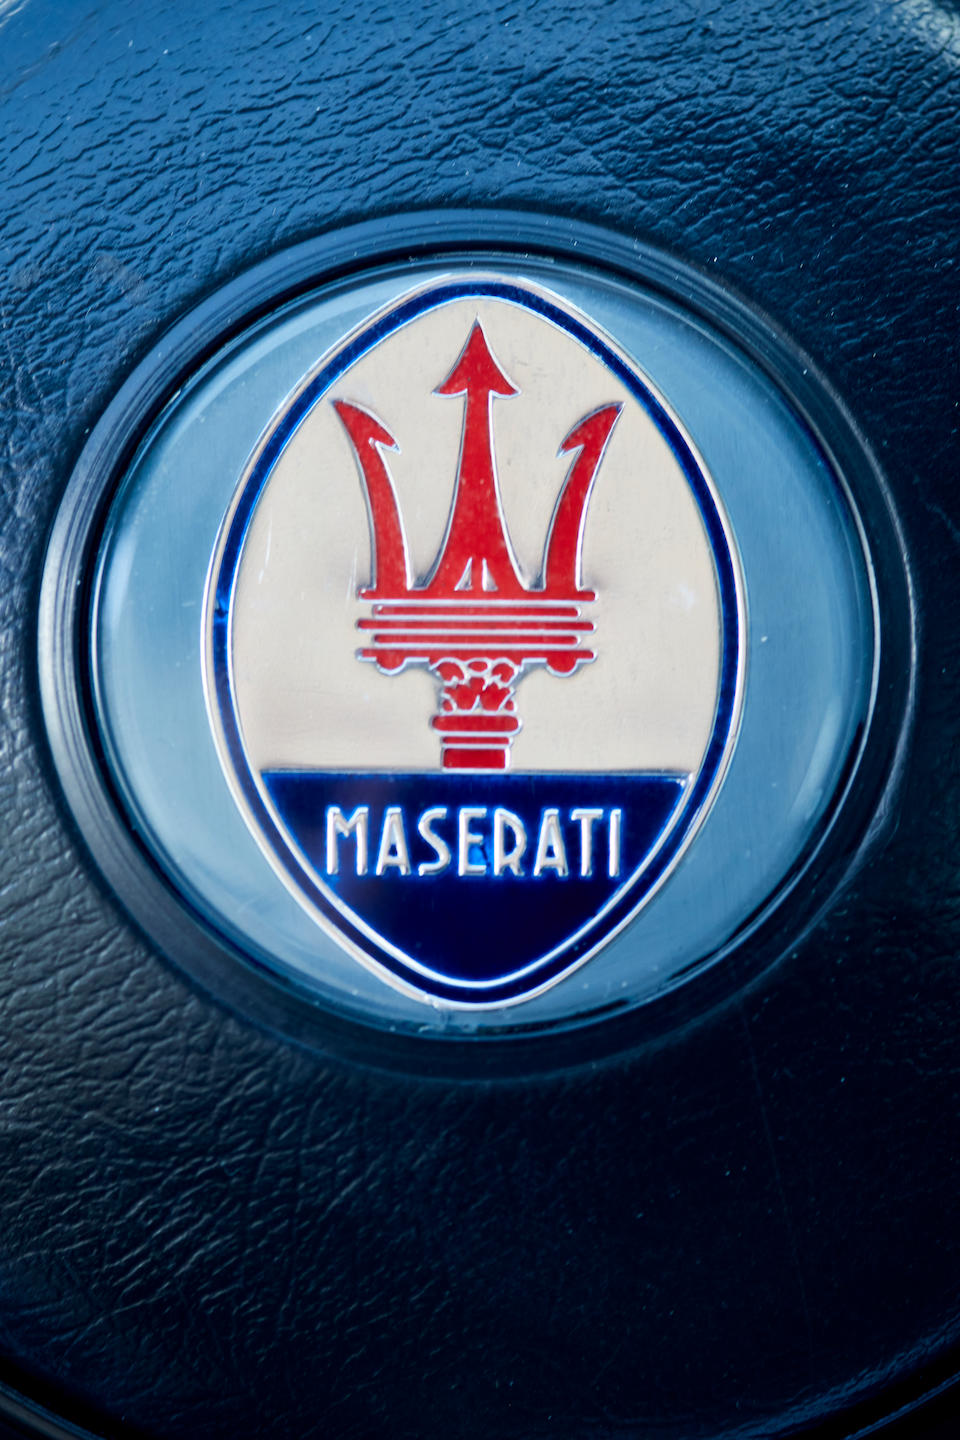 1977 Maserati Merak SS<br />  Chassis no. AM122US2210<br />Engine no. 114.63.30.610.135